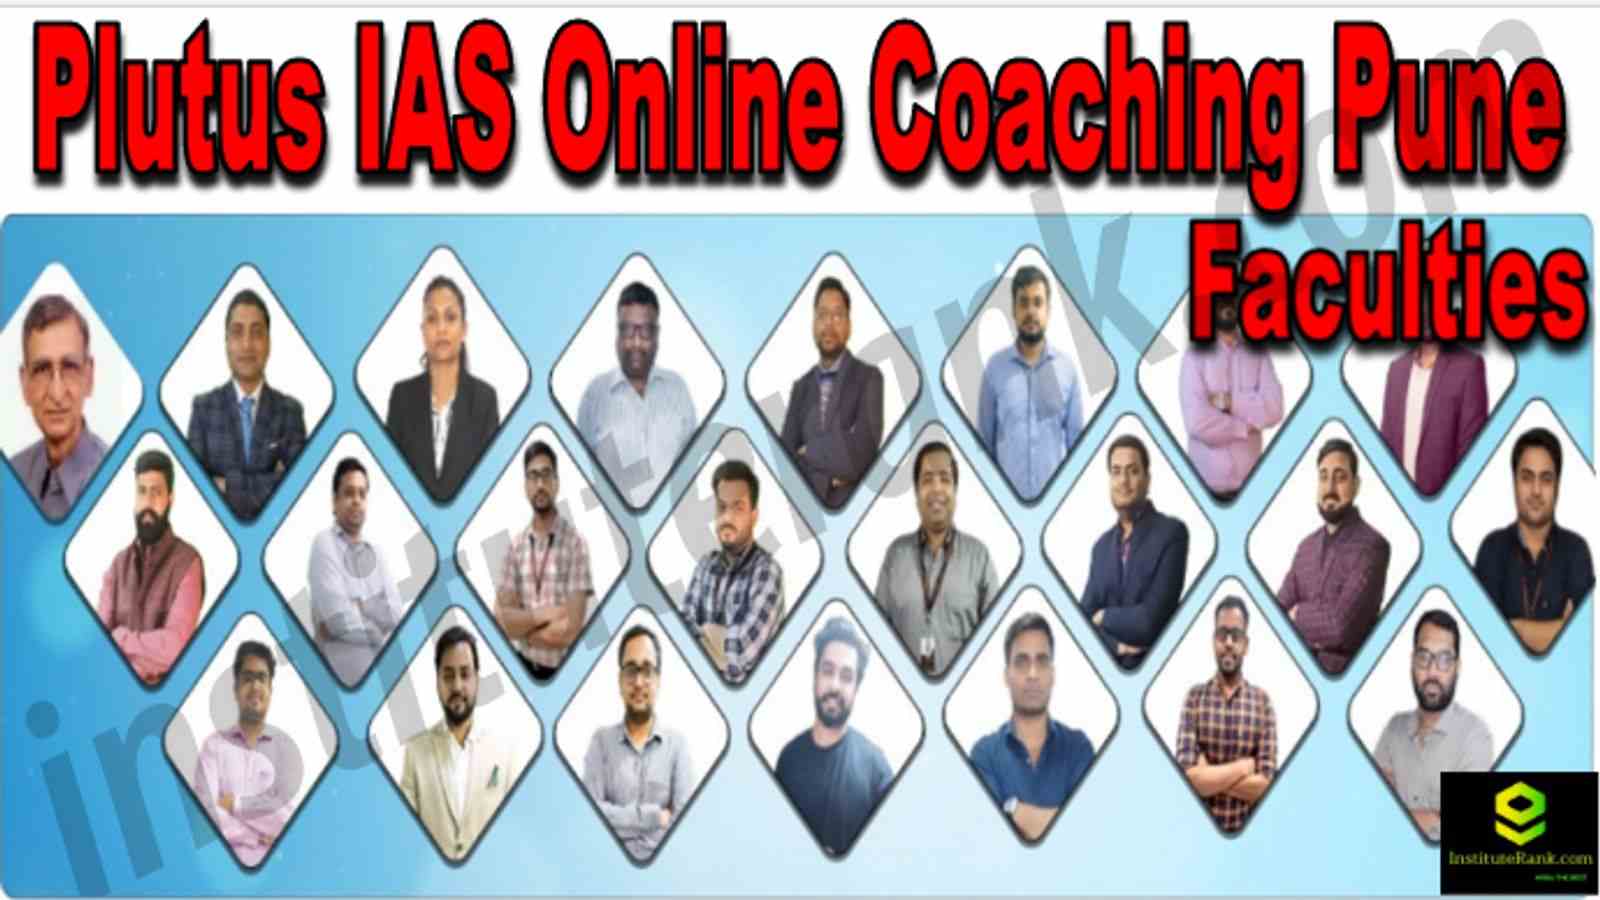 Plutus IAS Online Coaching Pune Reviews Faculties